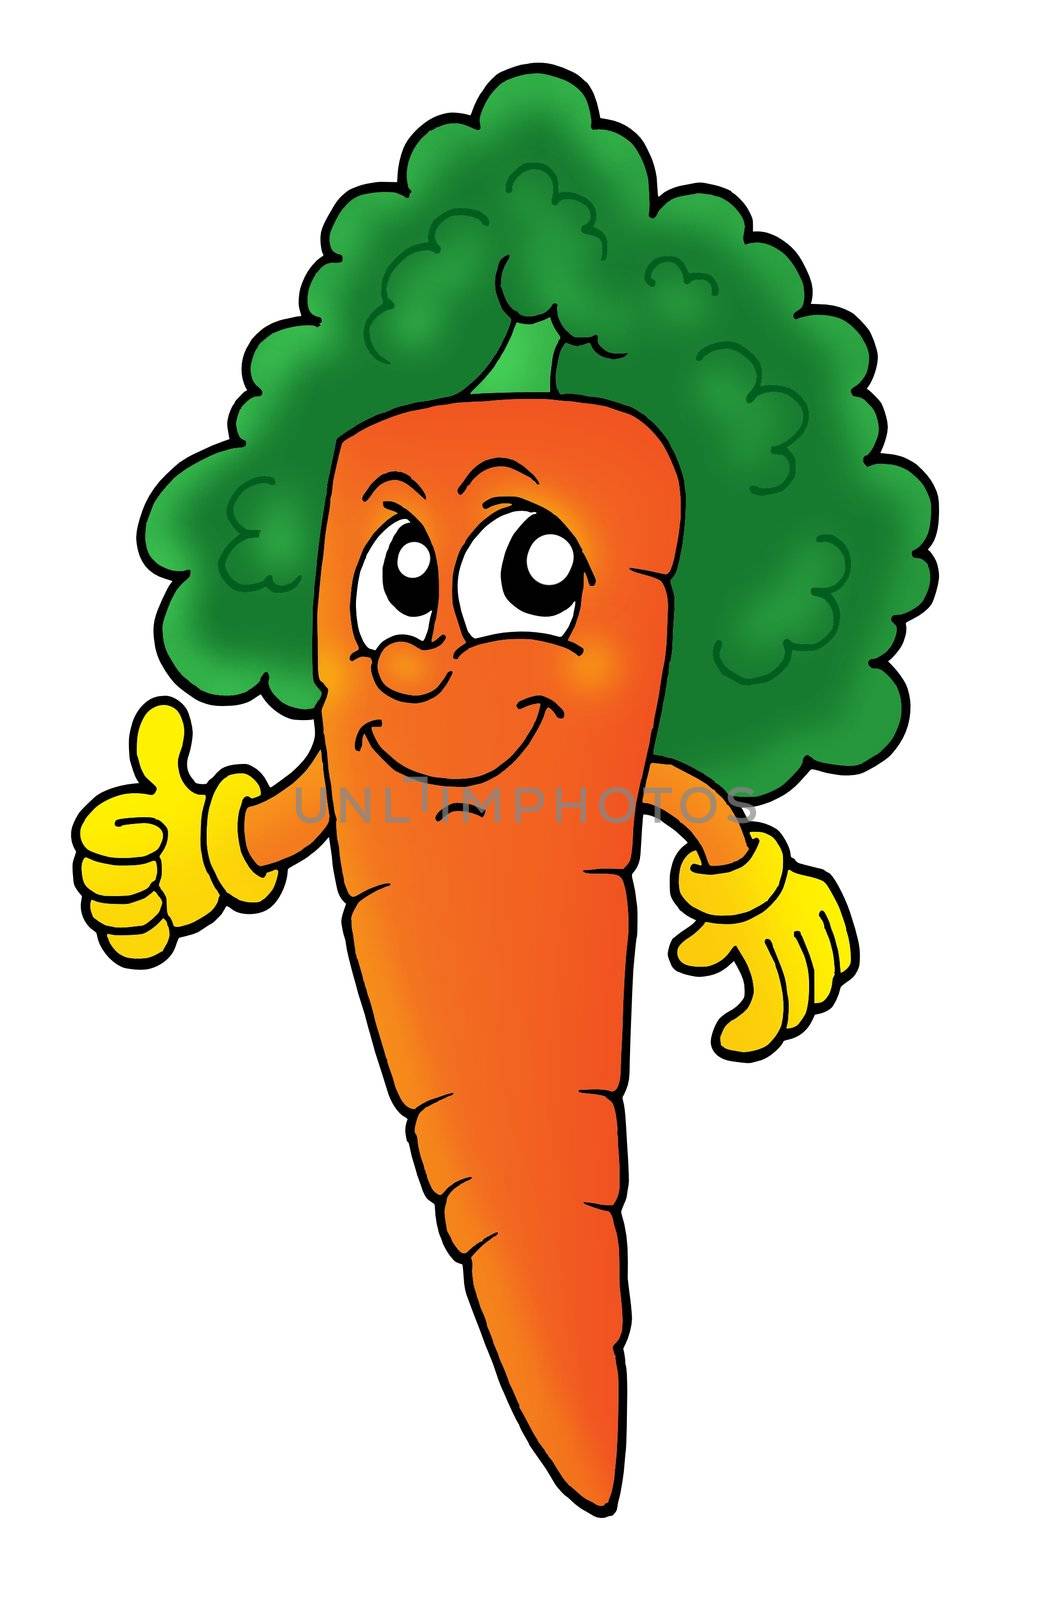 Curly orange carrot - color illustration.